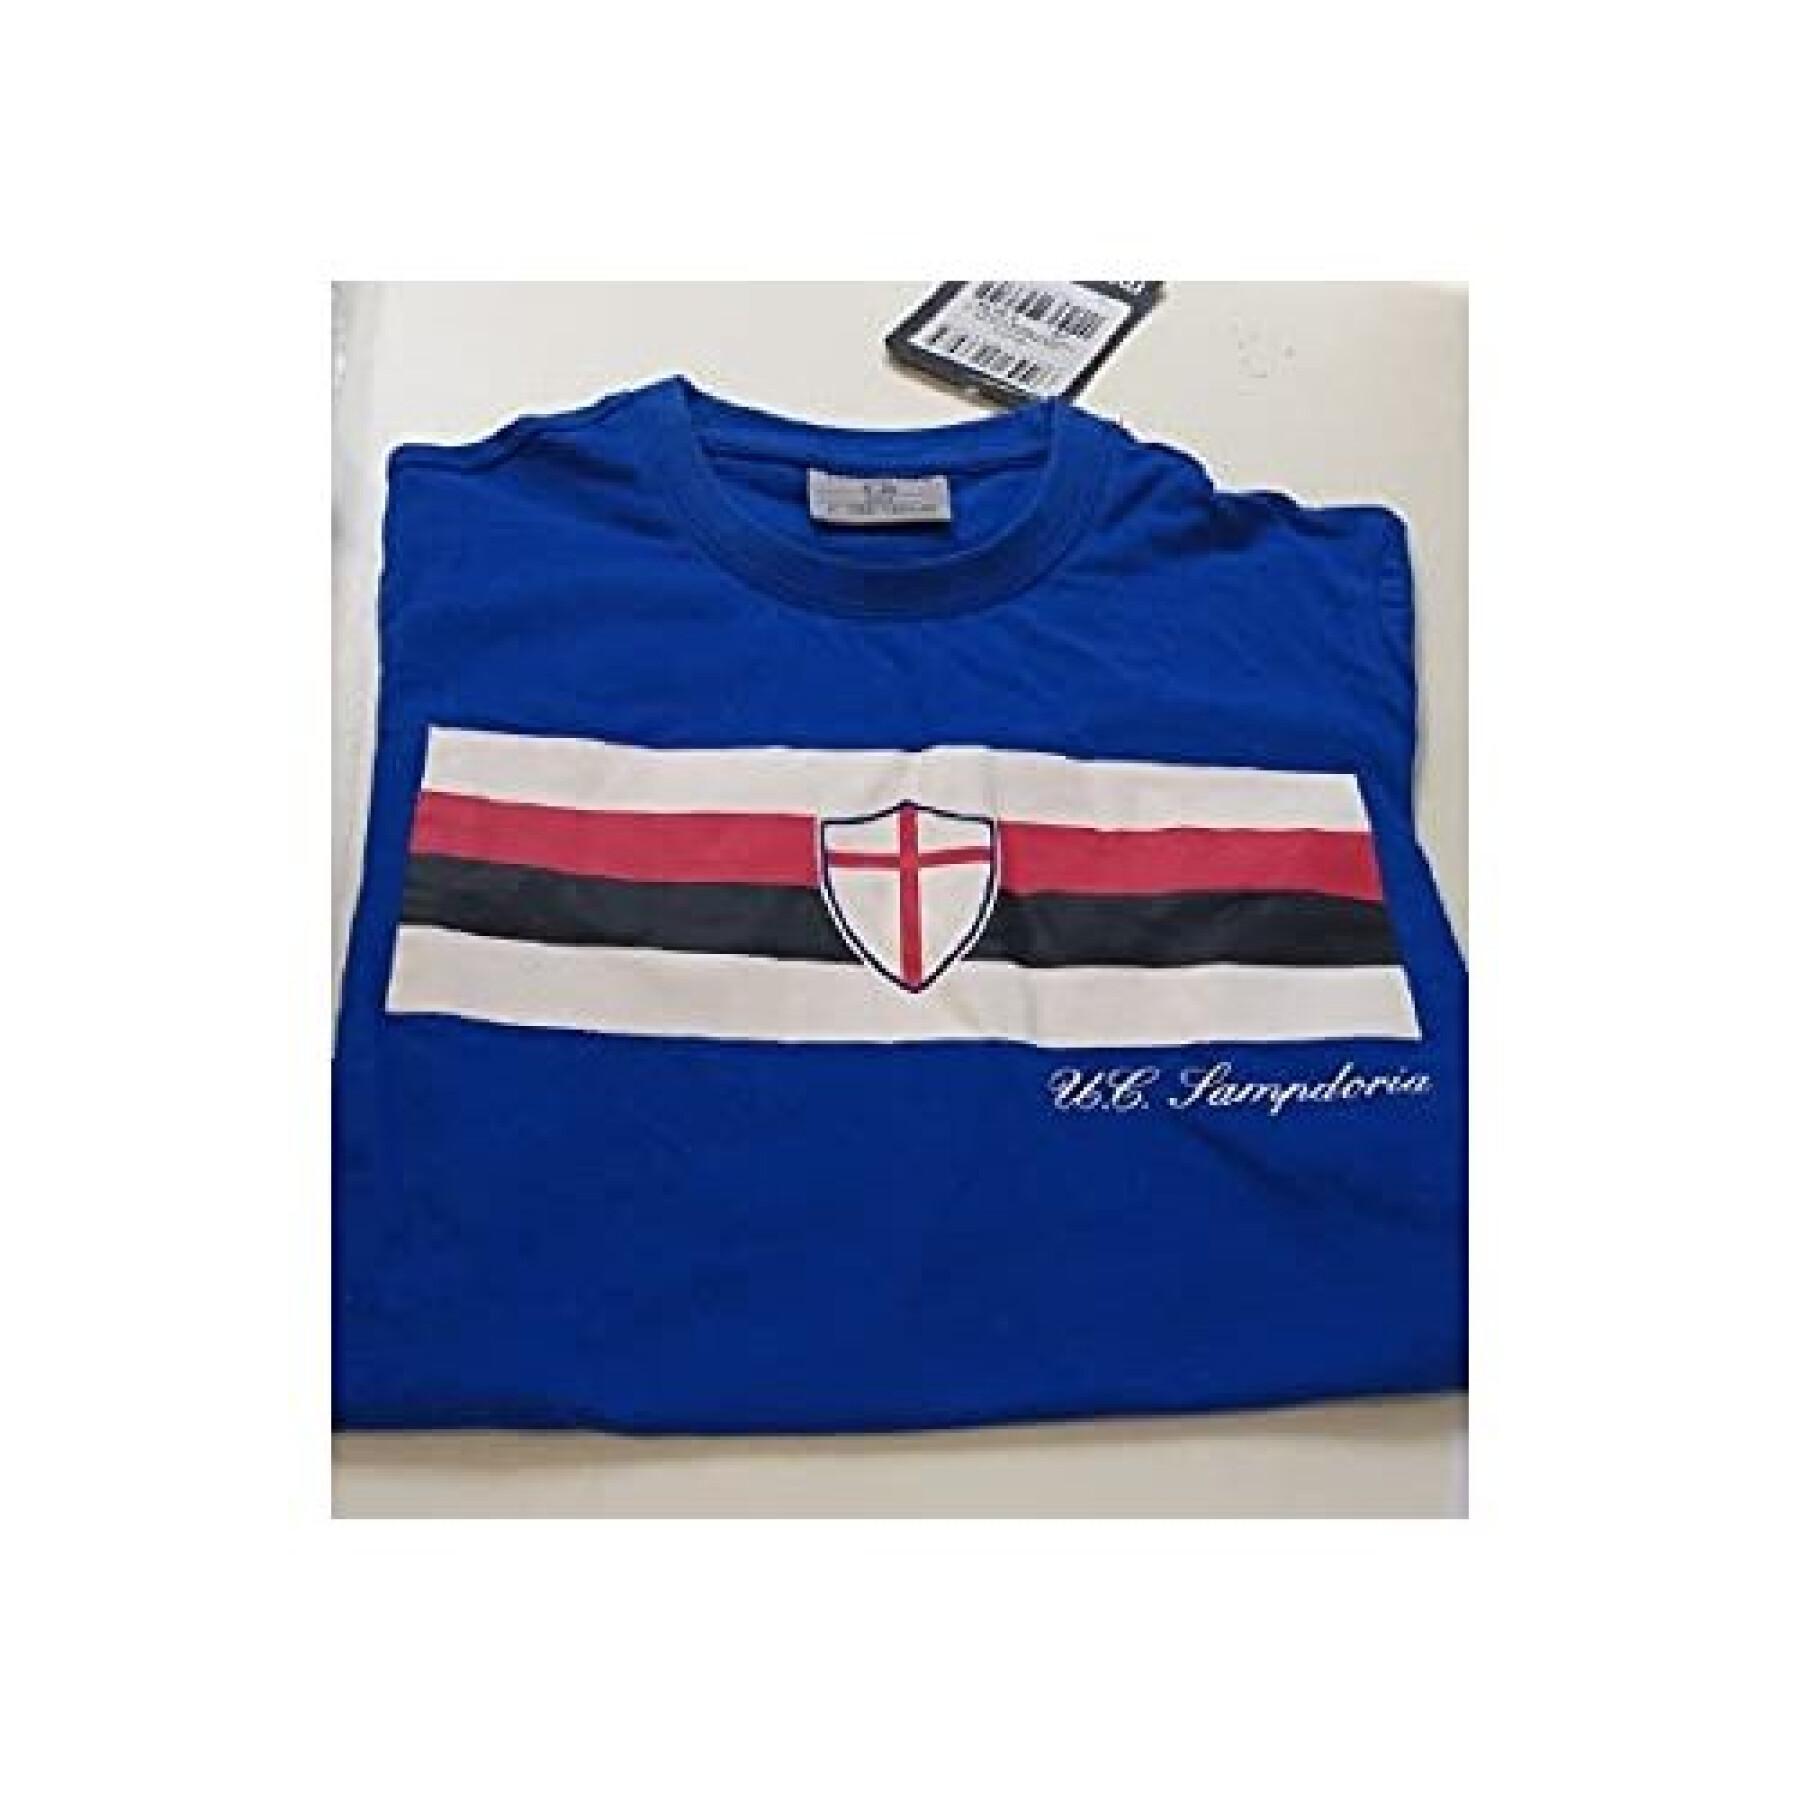 Cotton T-shirt UC Sampdoria